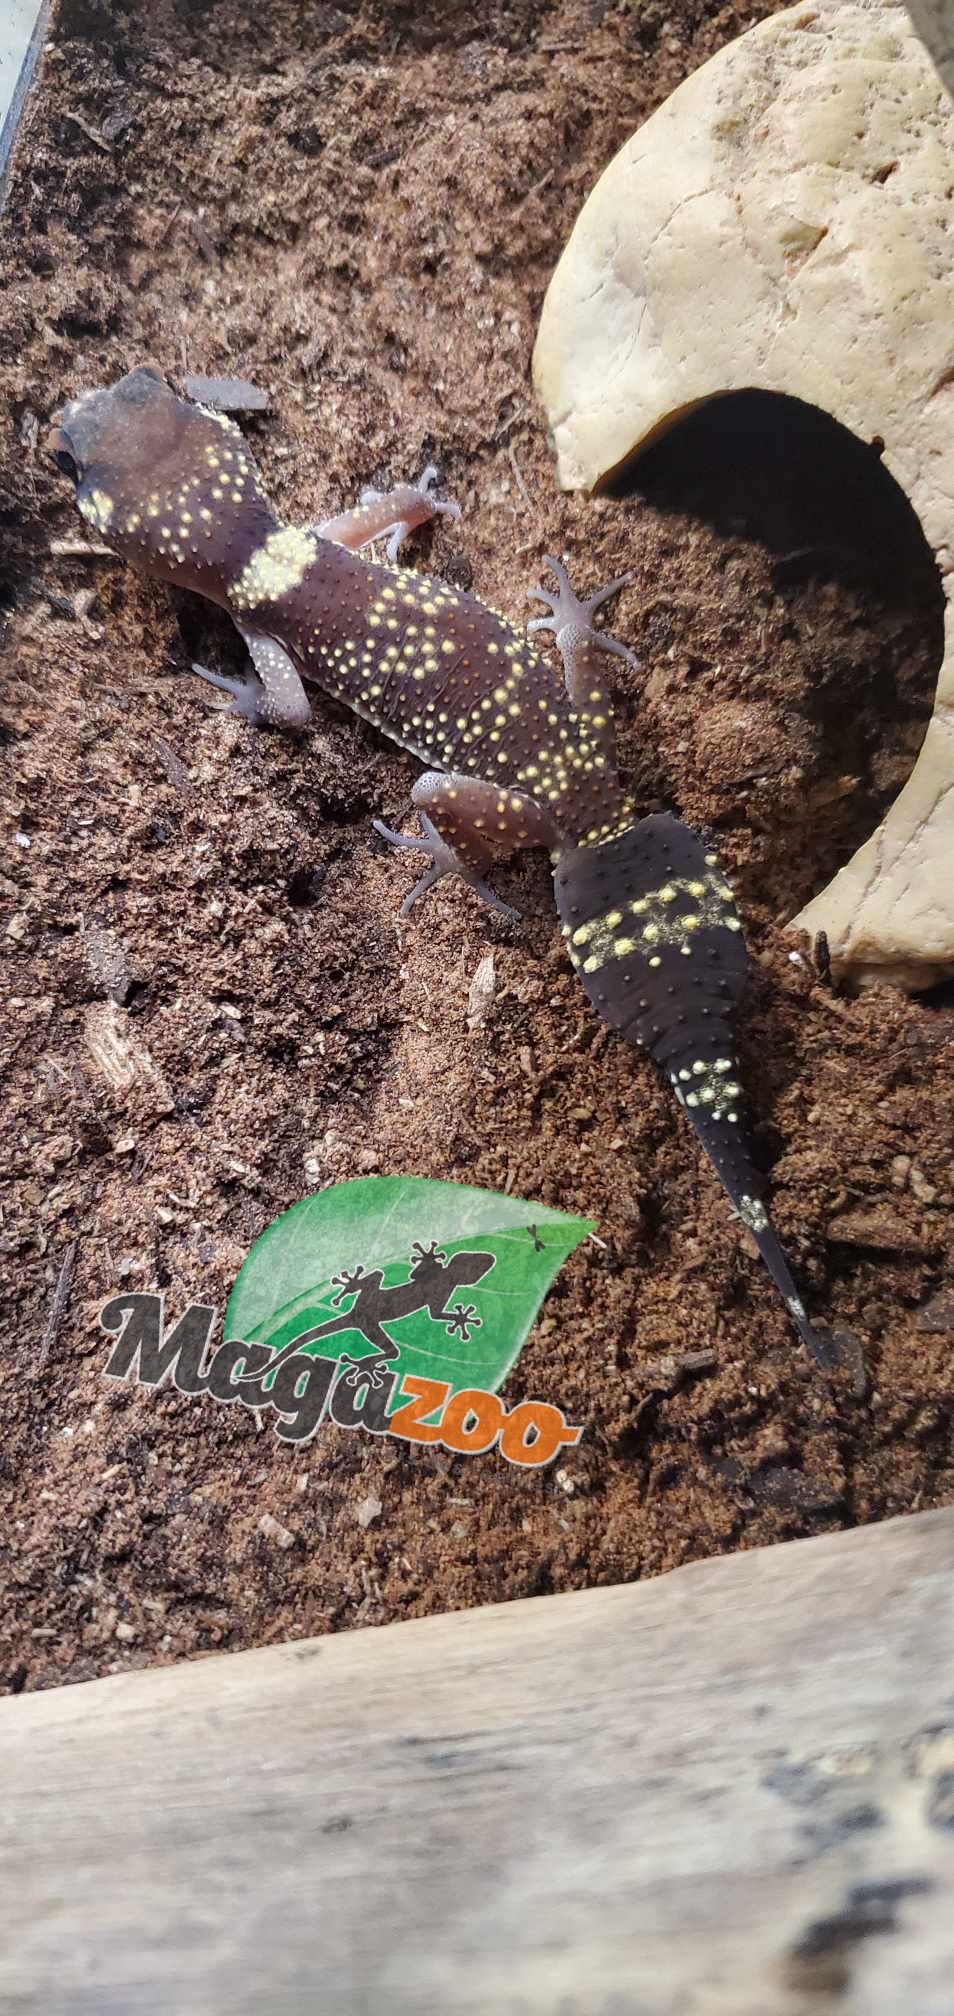 Magazoo Gecko aboyeur australien (Australian barking gecko)